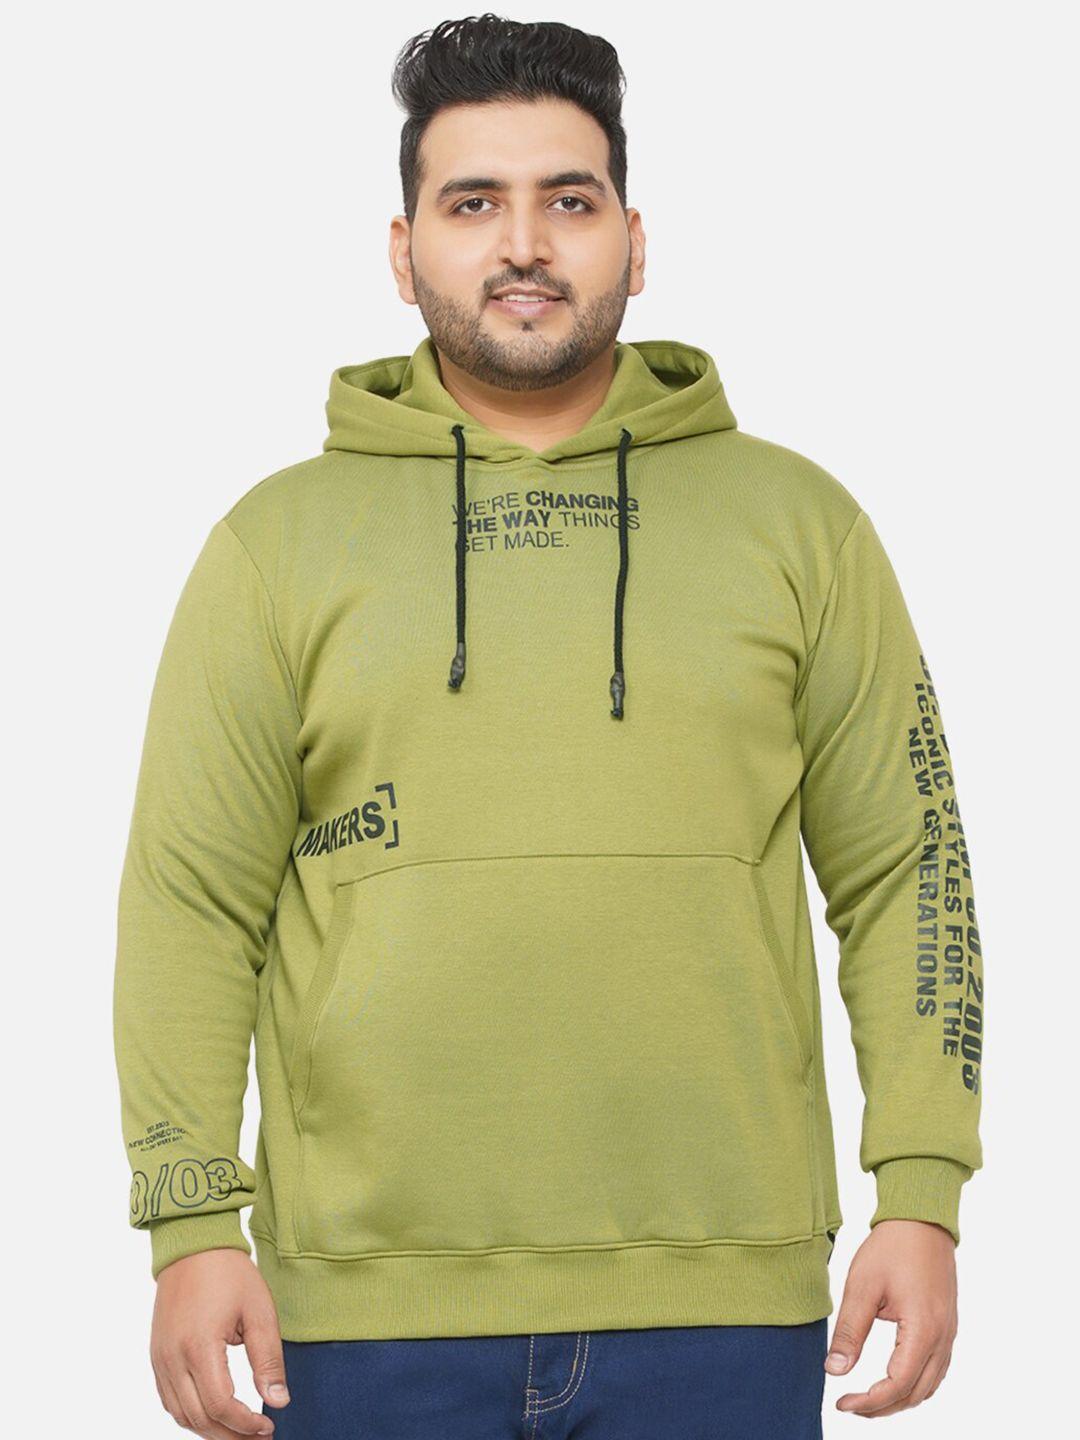 john-pride-plus-size-men-olive-green-hooded-sweatshirt